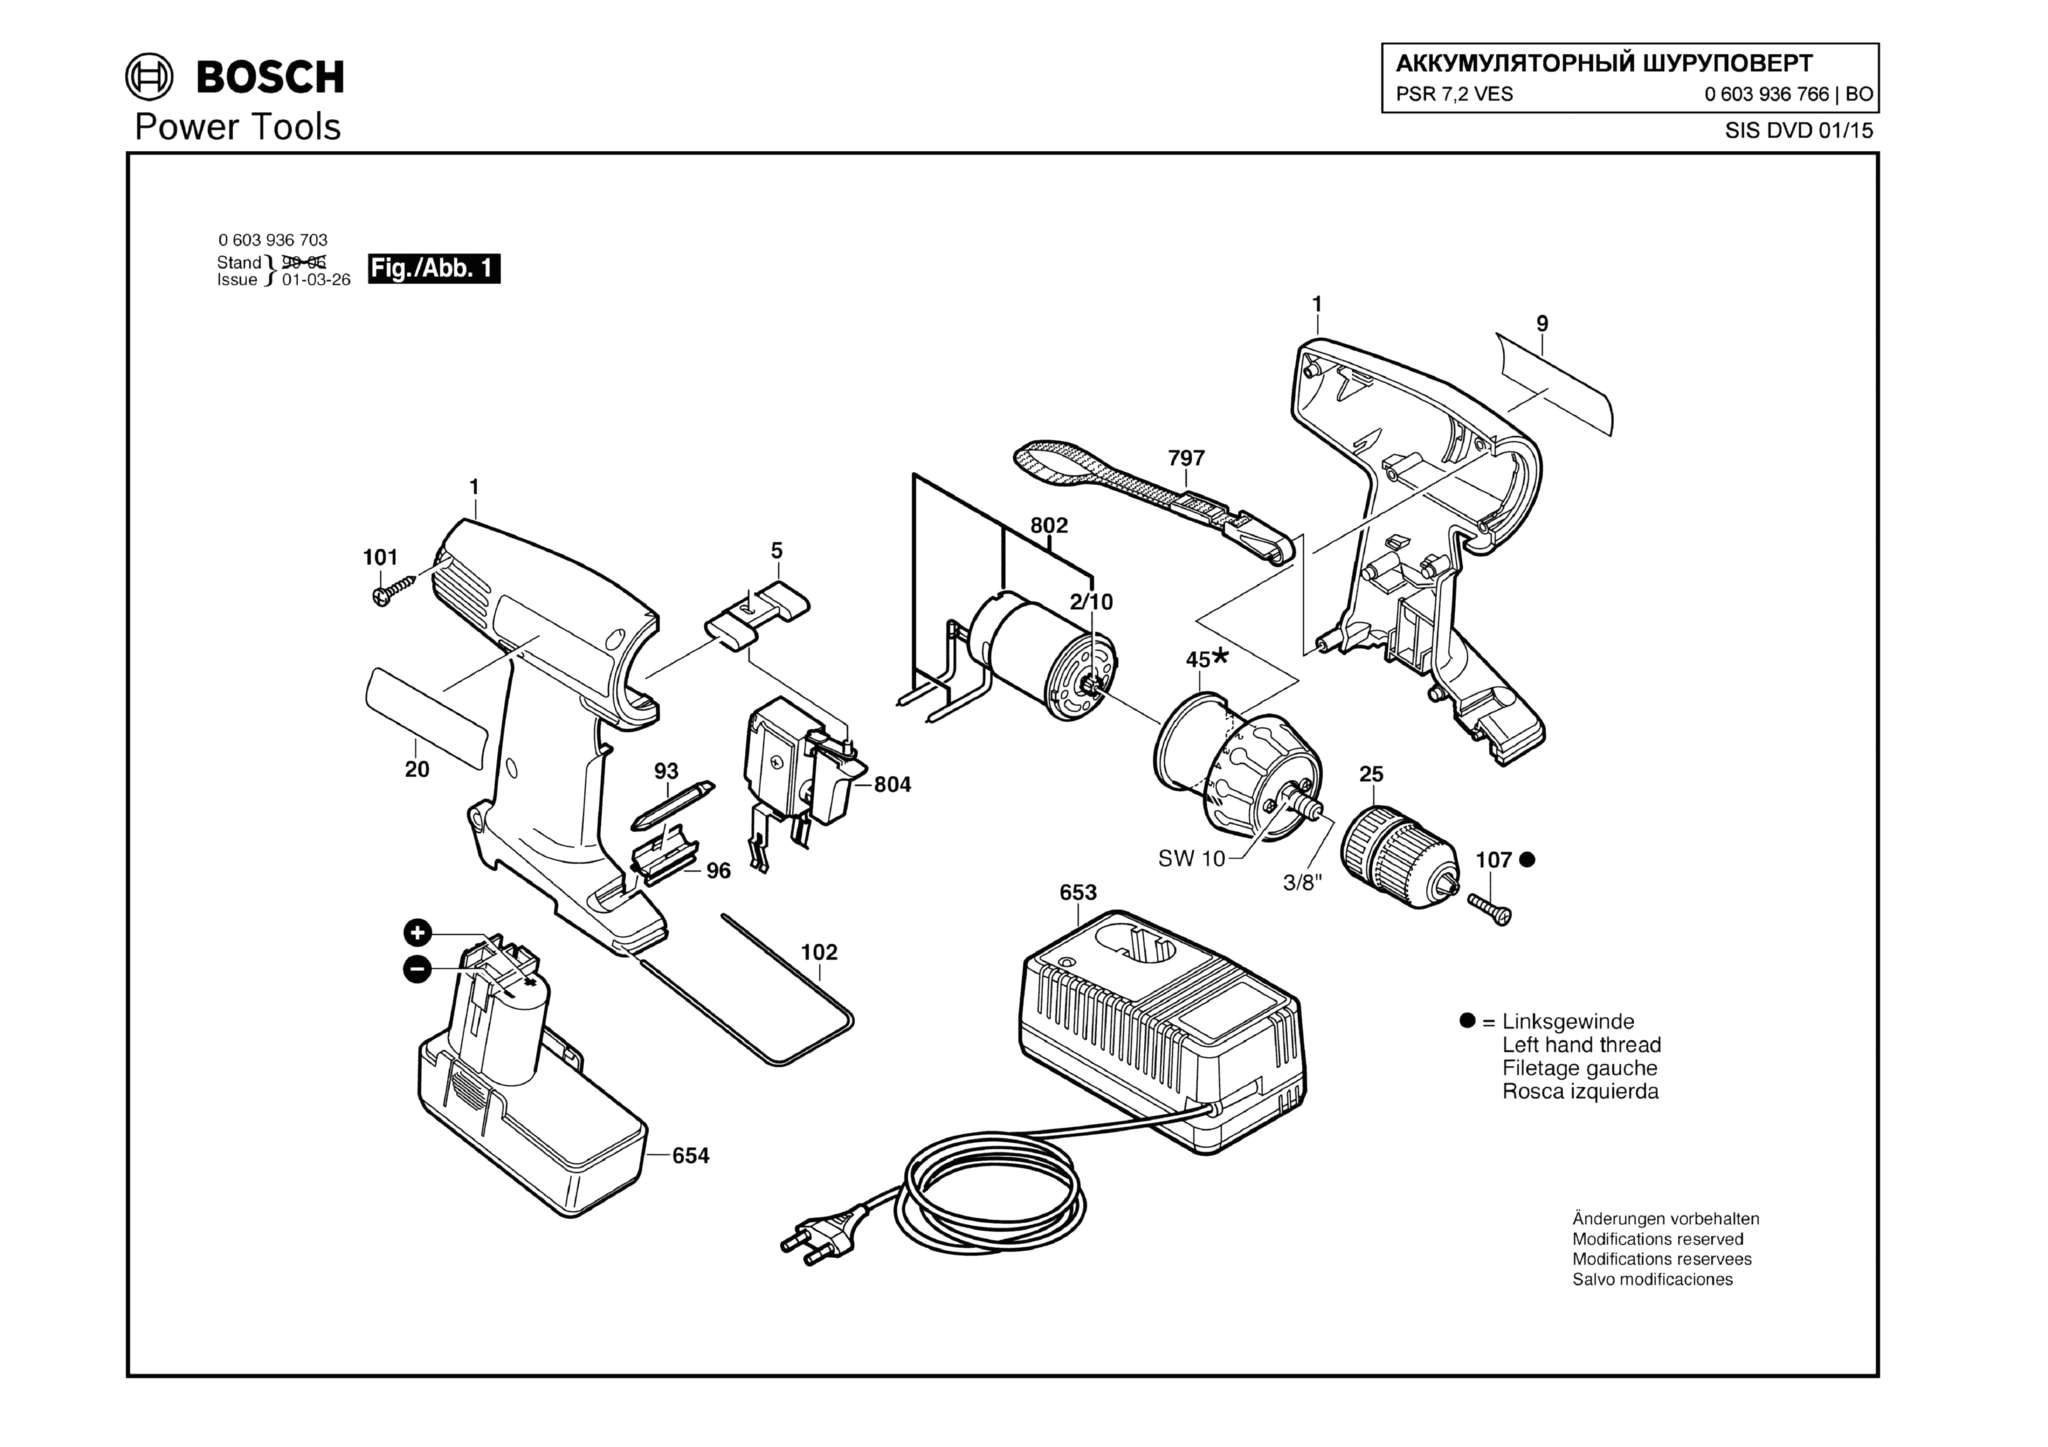 Запчасти, схема и деталировка Bosch PSR 7,2 VES (ТИП 0603936766)